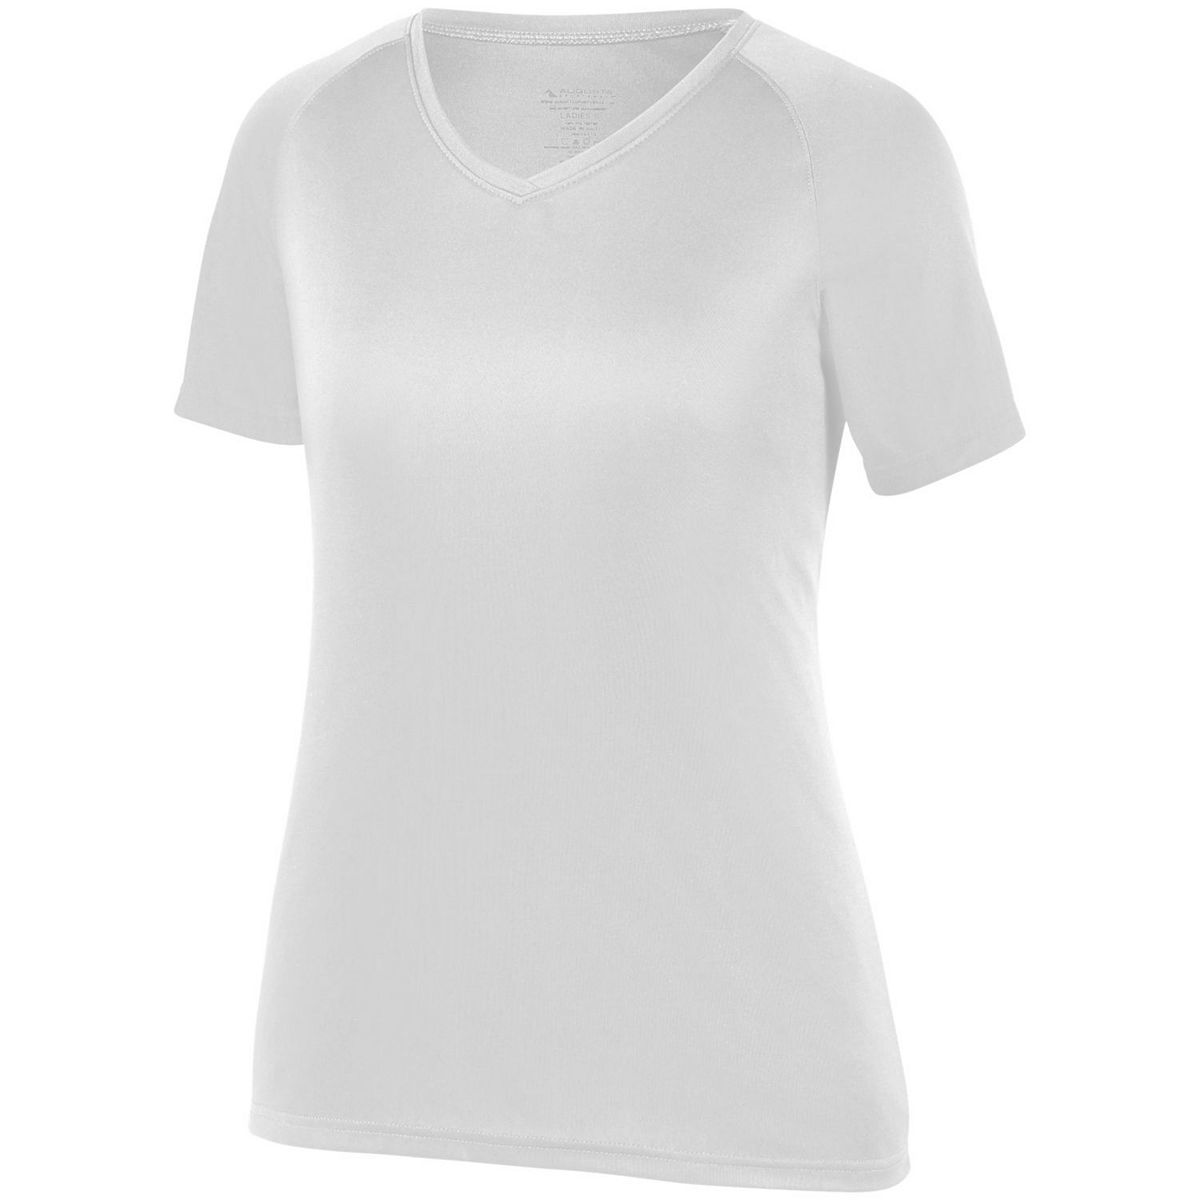 Augusta Sportswear Girls Attain Wicking Raglan Sleeve Tee in White  -Part of the Girls, T-Shirts, Augusta-Products, Girls-Tee-Shirt, Shirts product lines at KanaleyCreations.com